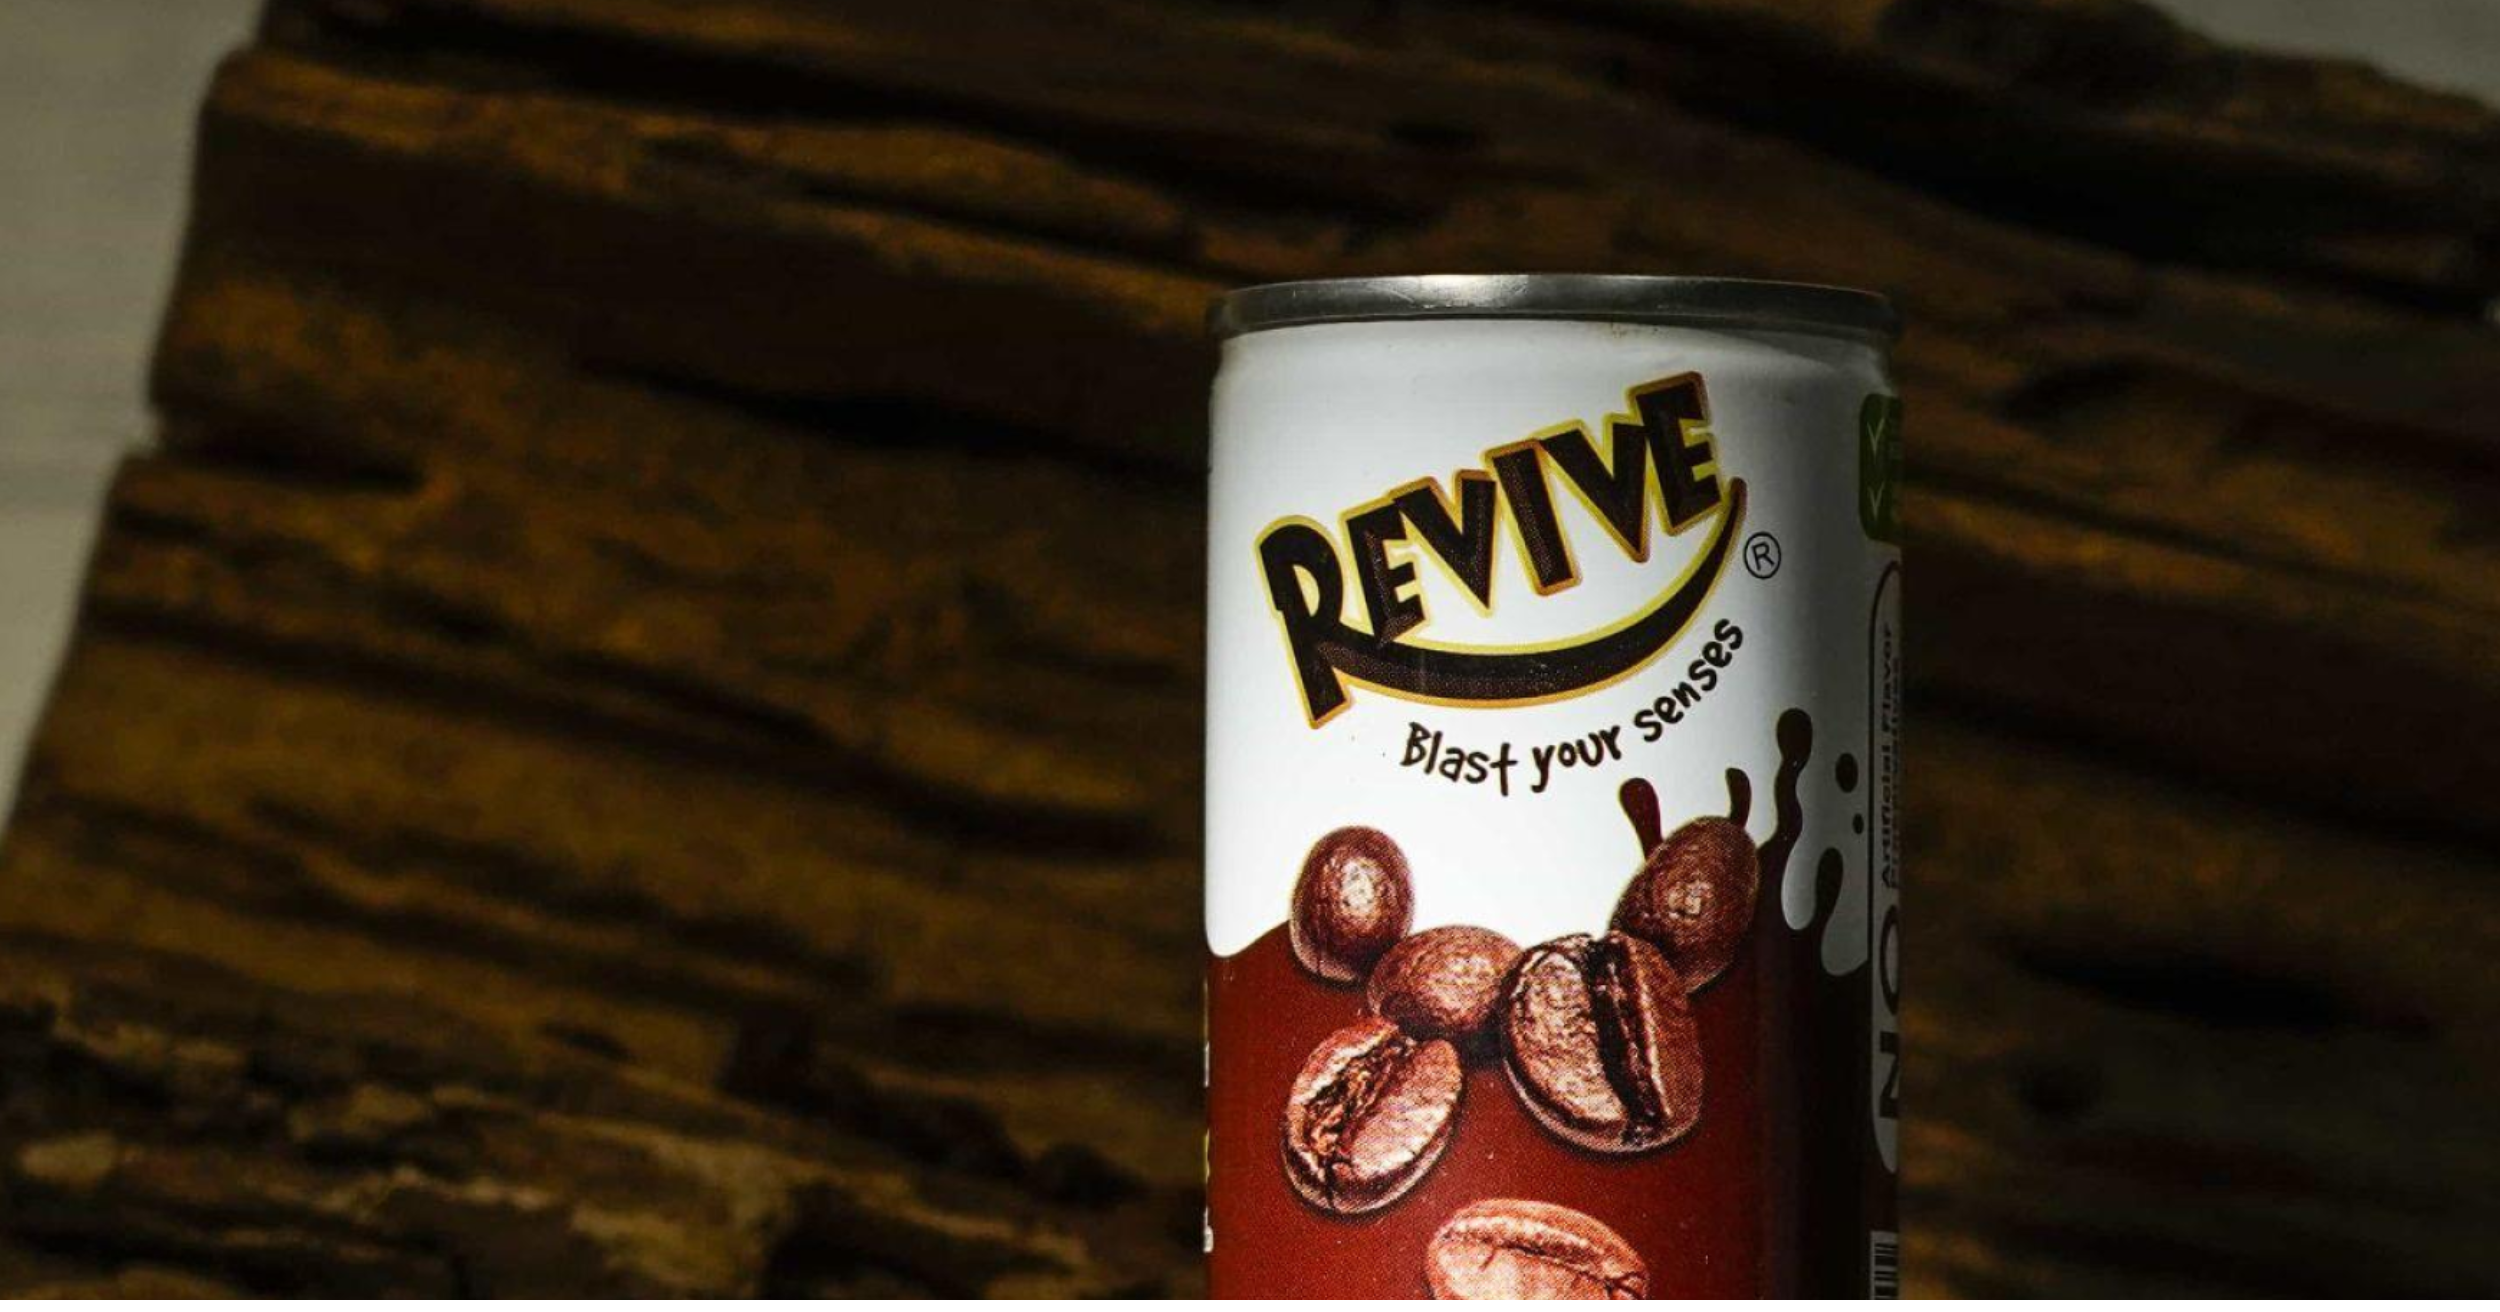 revive drink